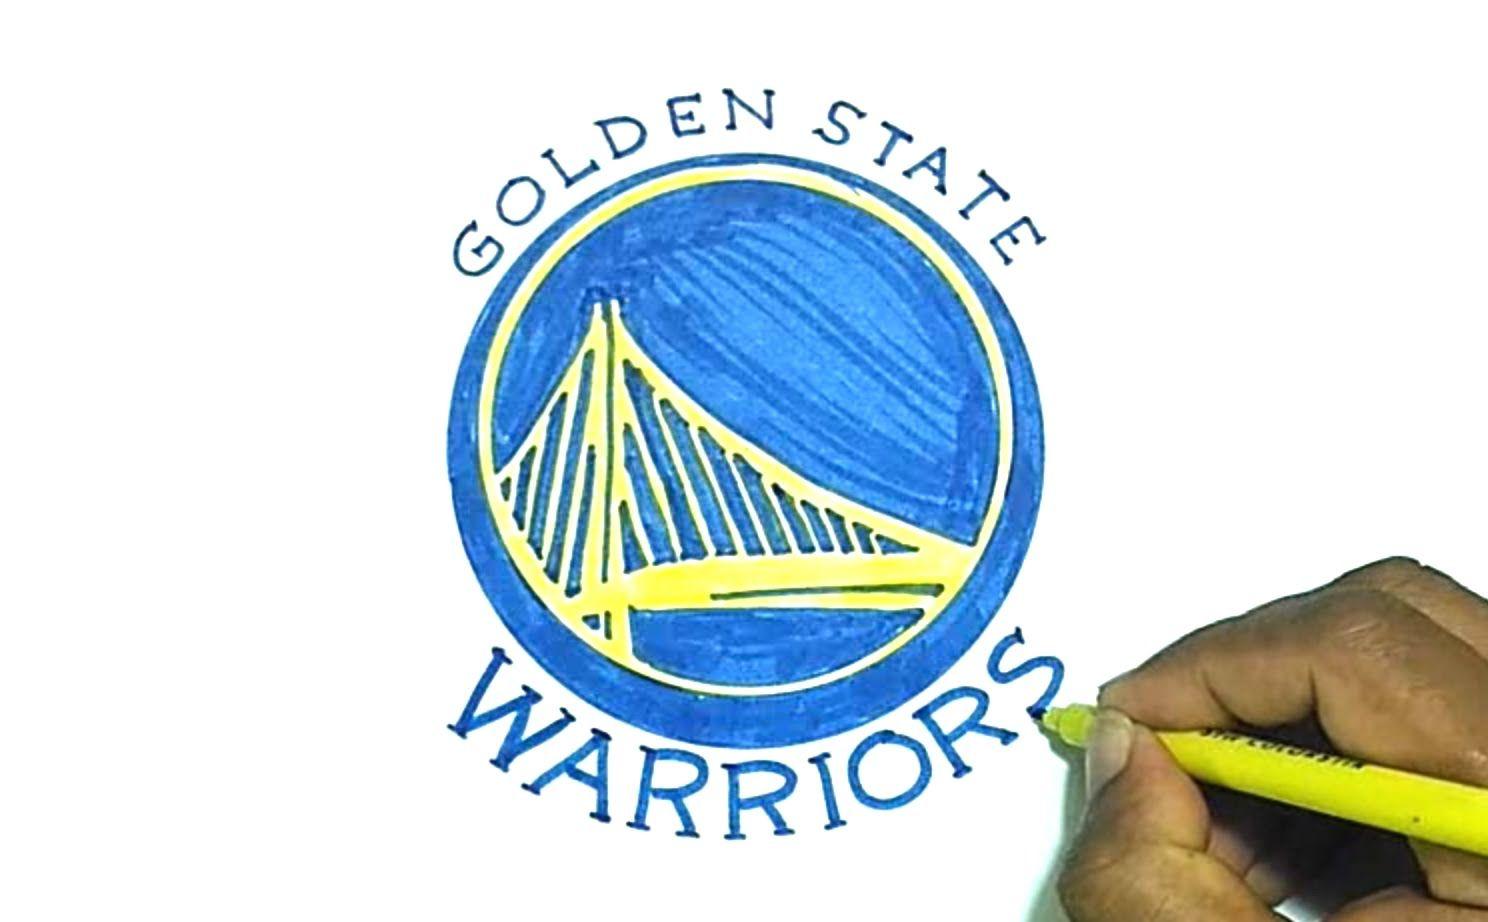 Golden State Logo - Golden State Warriors logos